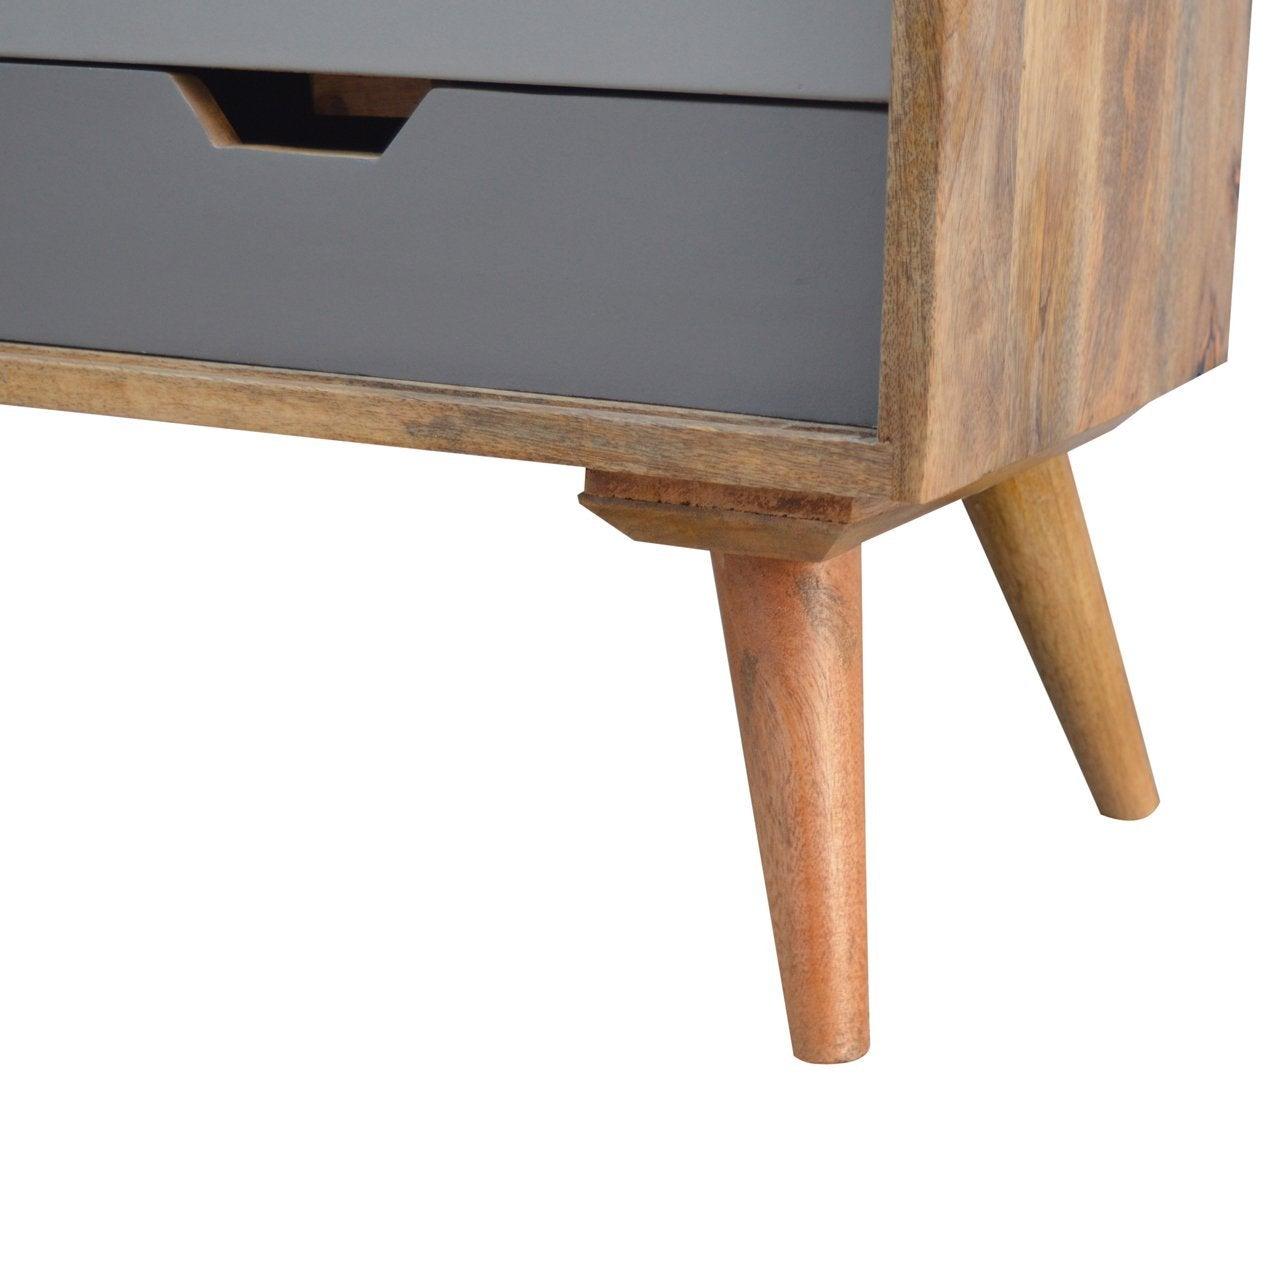 Nordic sliding cabinet with 4 drawers - crimblefest furniture - image 11